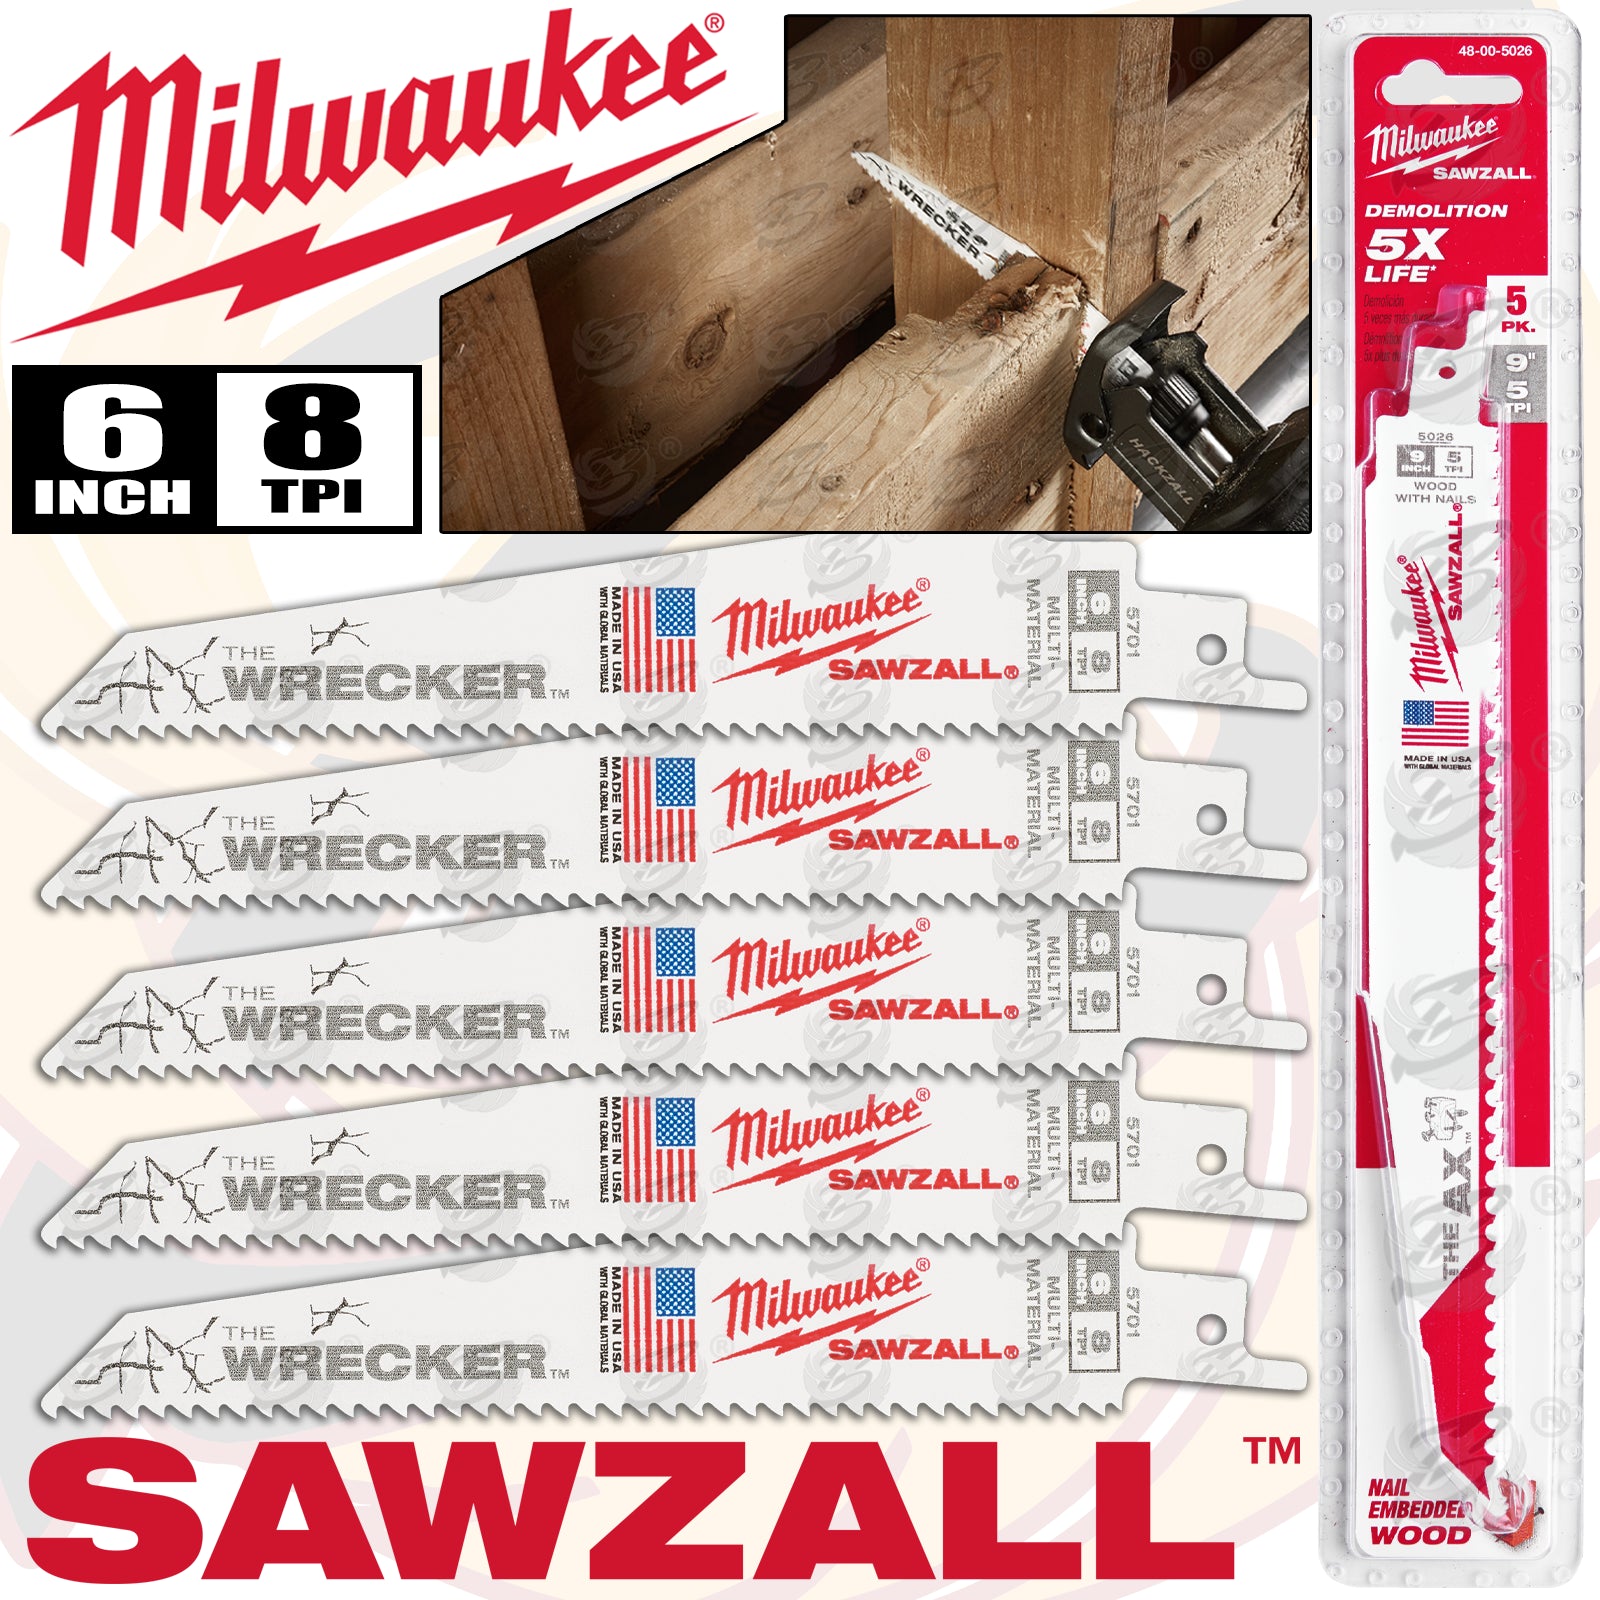 MILWAUKEE SAWZALL RECIPROCATING SAW BLADE 150mm x 8TPI MULTI MATERIAL